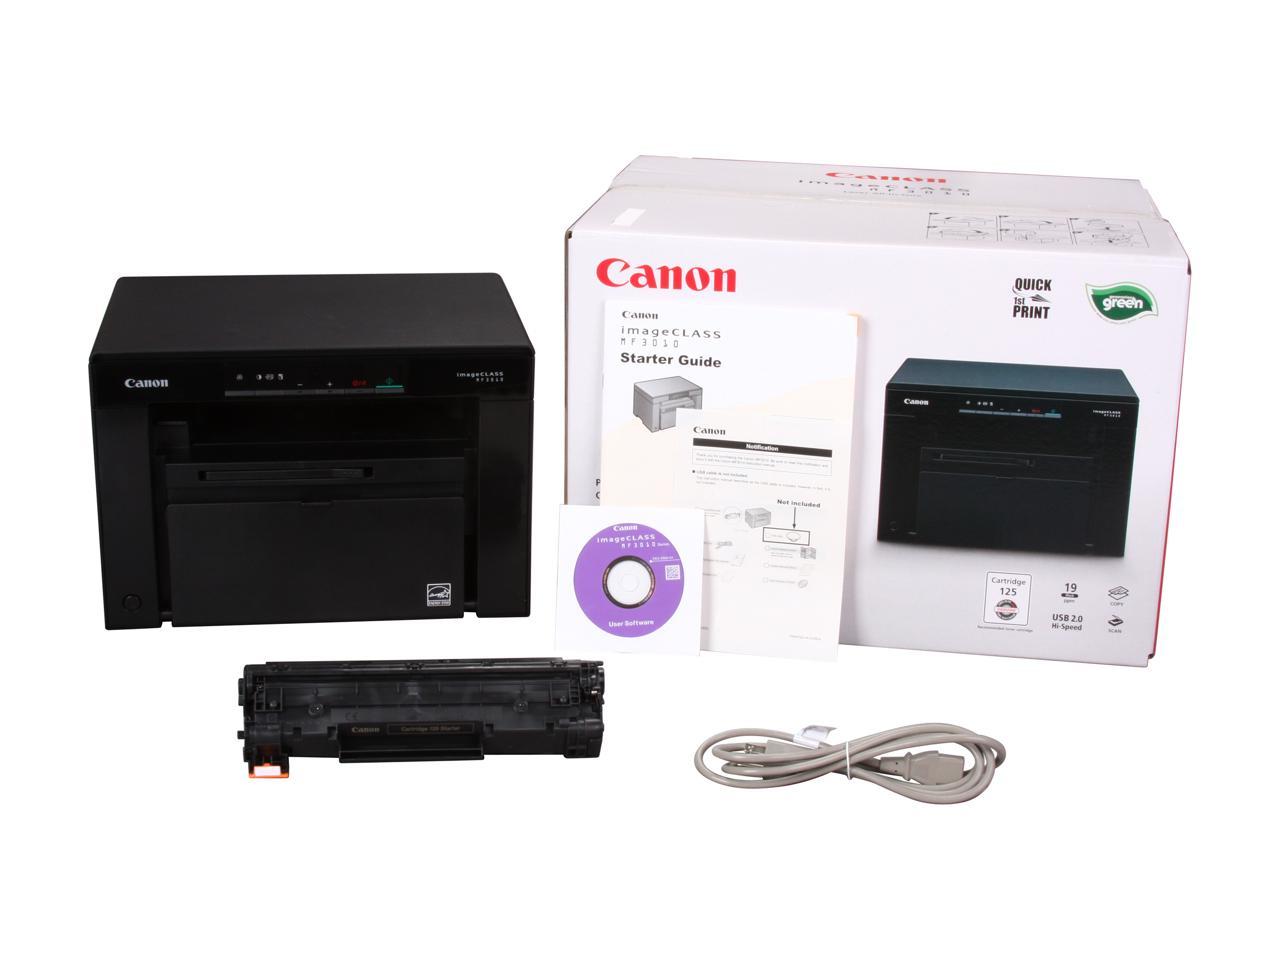 Canon imageCLASS MF3010 Monochrome All-in-One Laser Printer | Help Tech ...